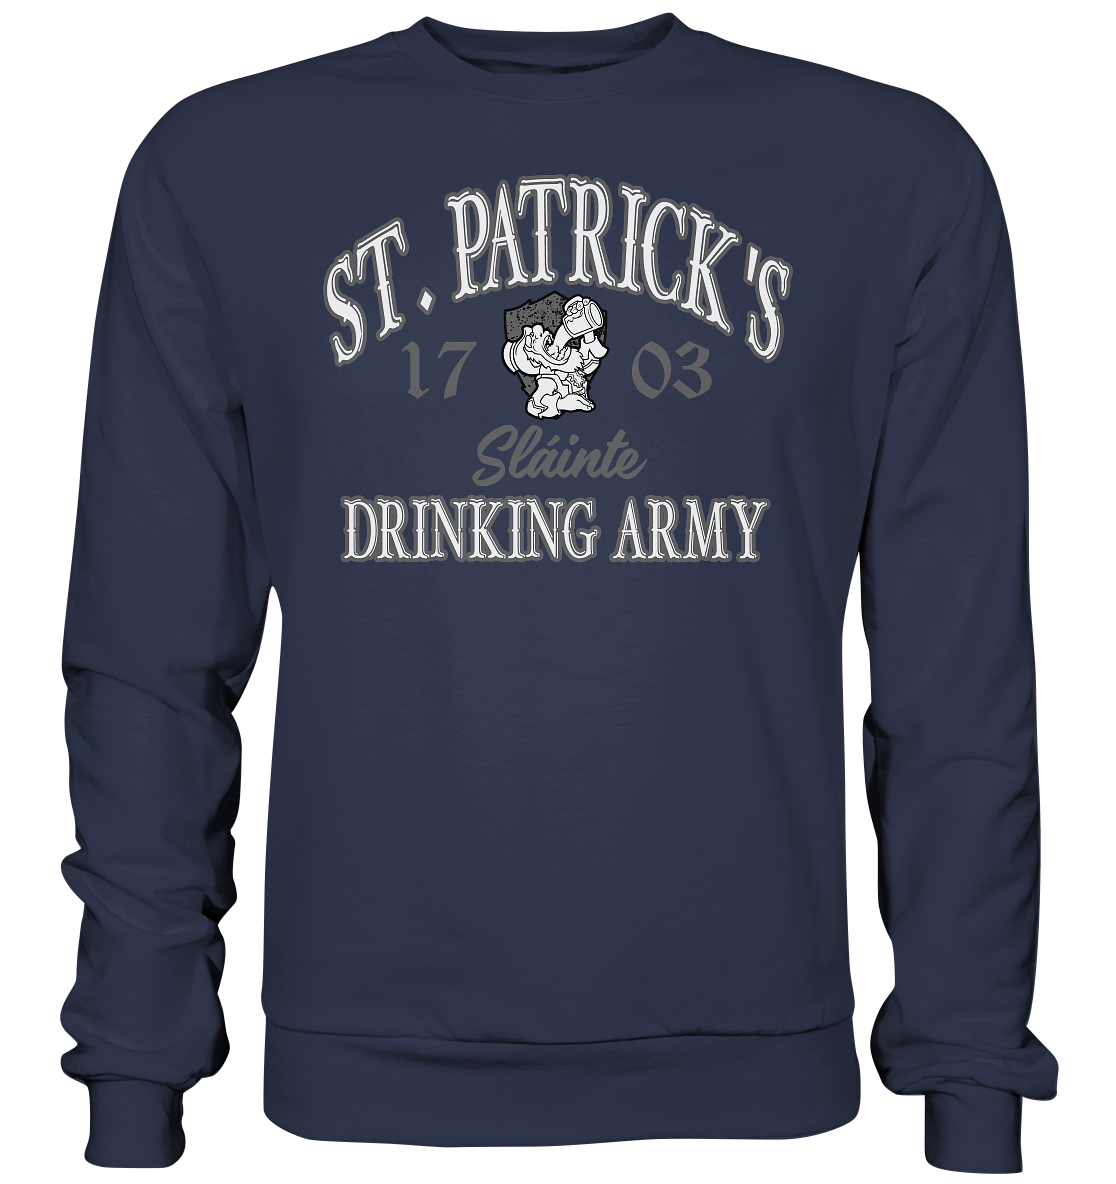 St. Patrick's Drinking Army "Sláinte" - Premium Sweatshirt